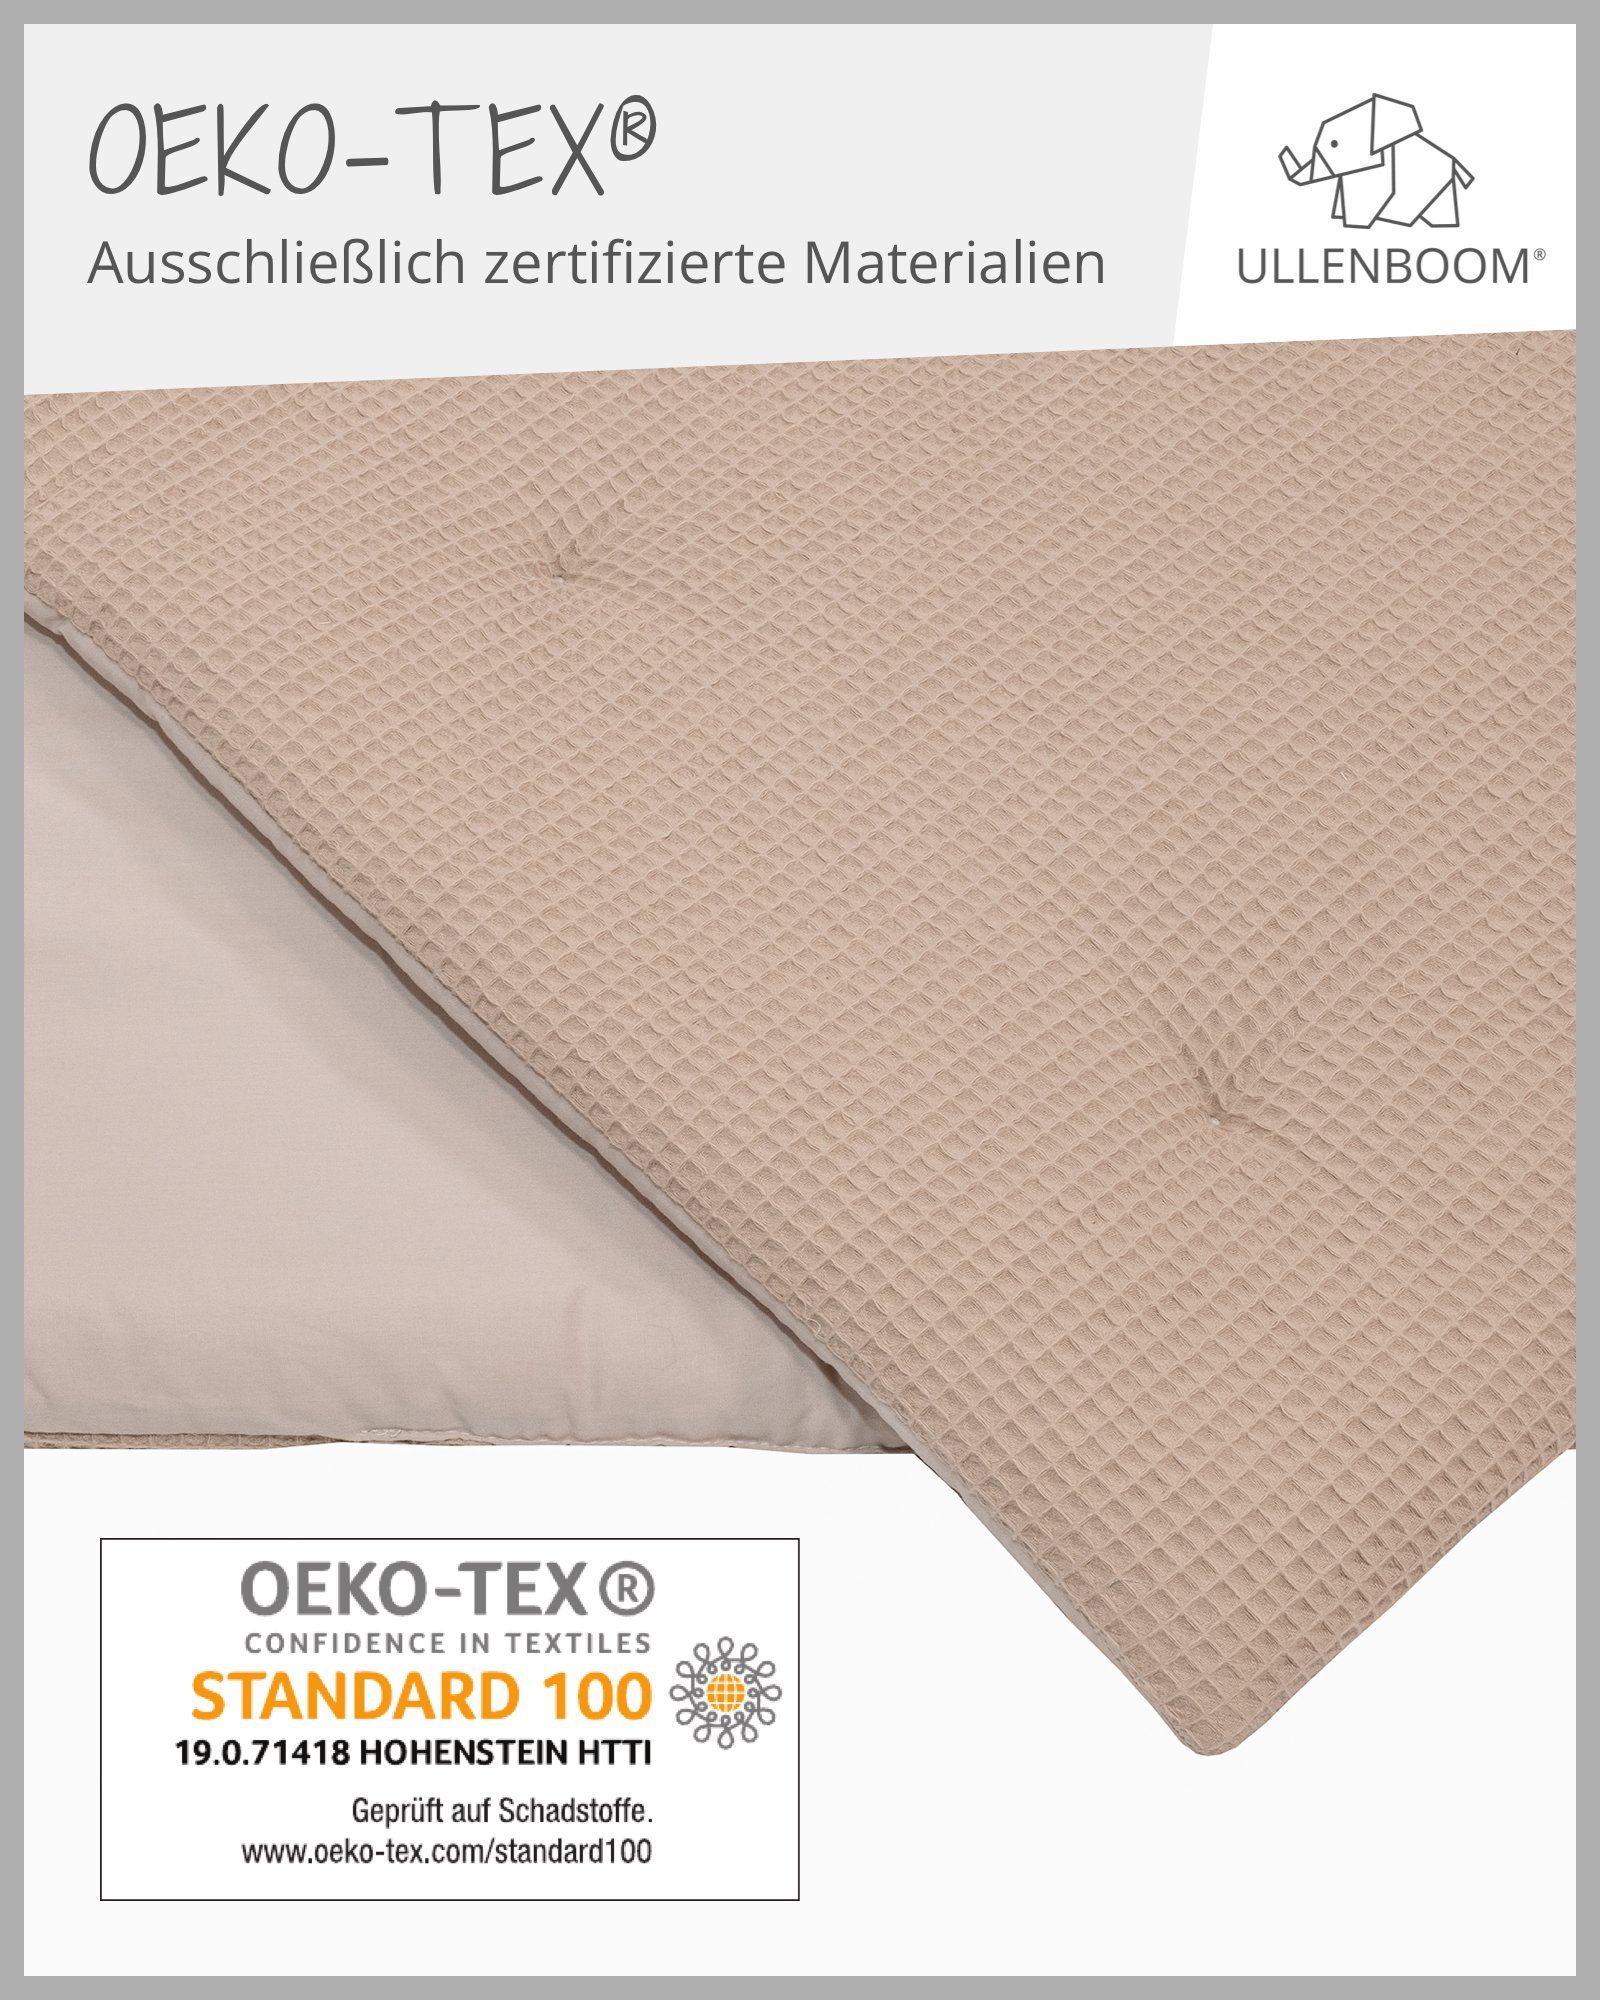 Krabbeldecke Waffelpiquè gepolstert, 100x100 Baumwolle, Dick (Made EU), ULLENBOOM in Baby 100% cm Krabbeldecke ®, Sand Außenstoff